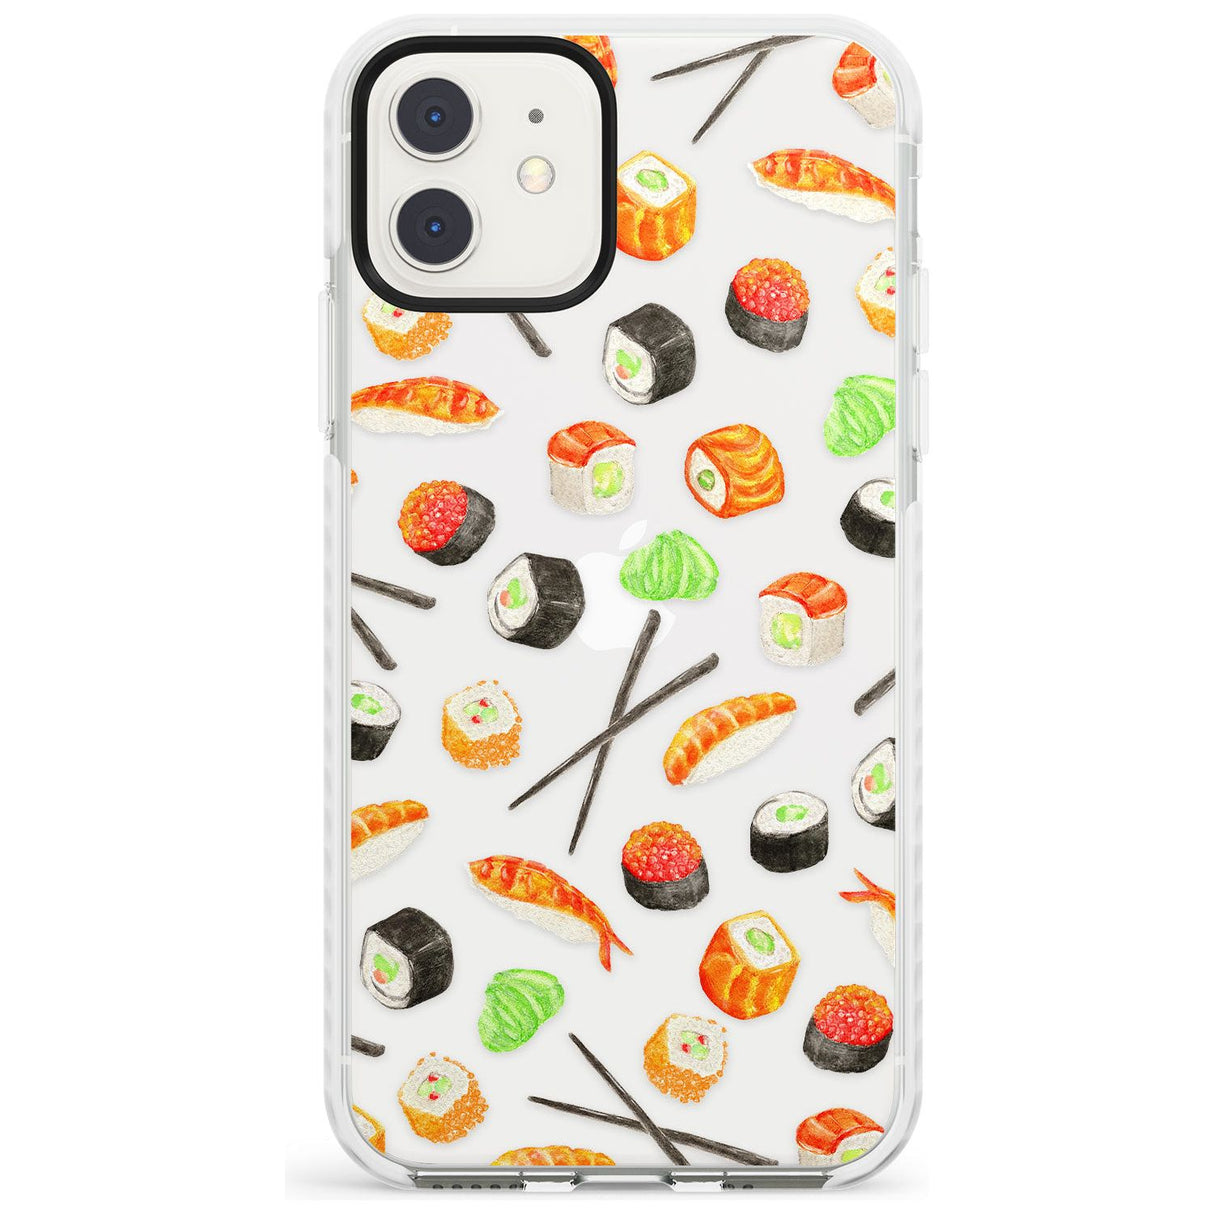 Sushi & Chopsticks Watercolour Pattern Impact Phone Case for iPhone 11